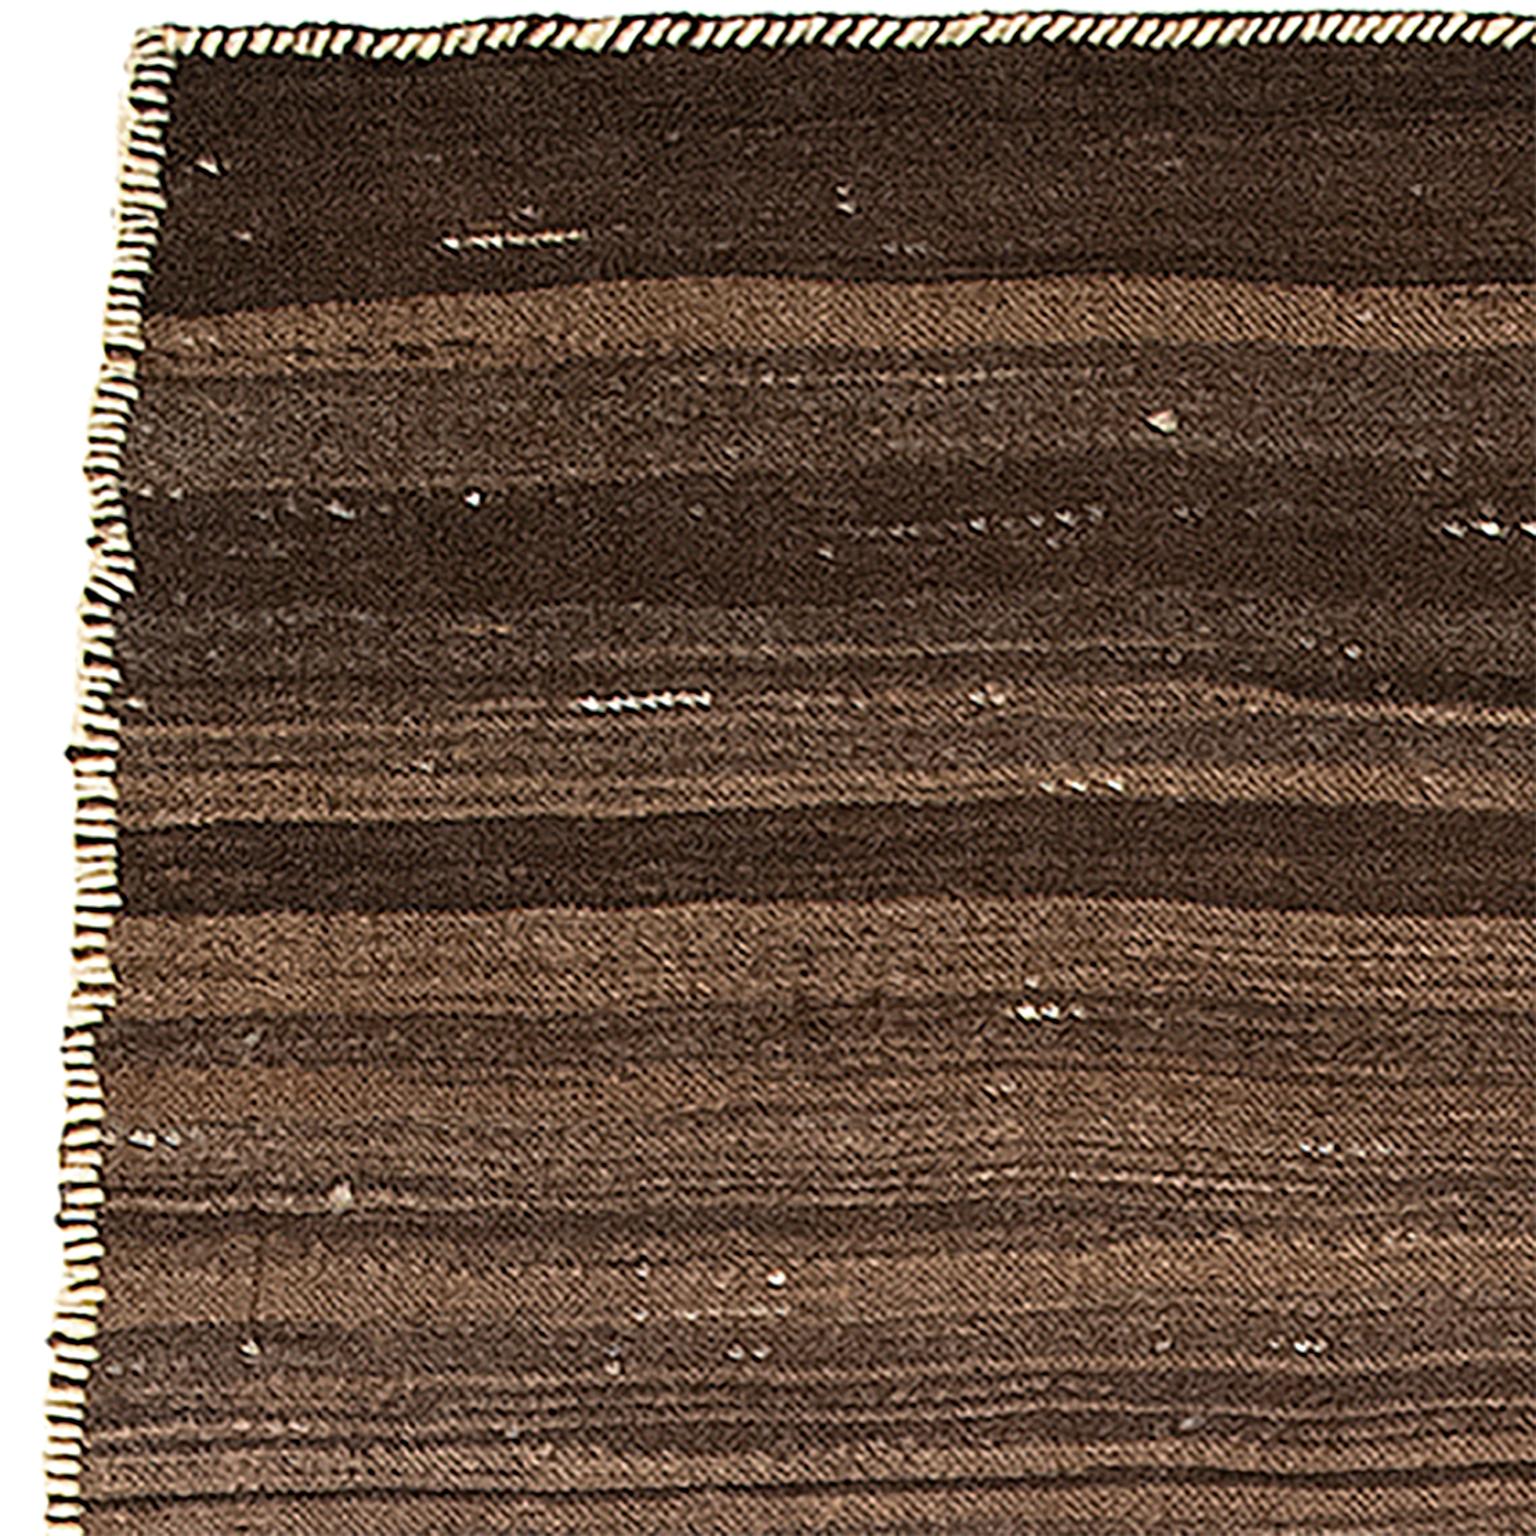 Vintage Kilim rug
Persia circa 1940
Dark Brown
Flatweave
Center seam


Measures: 17